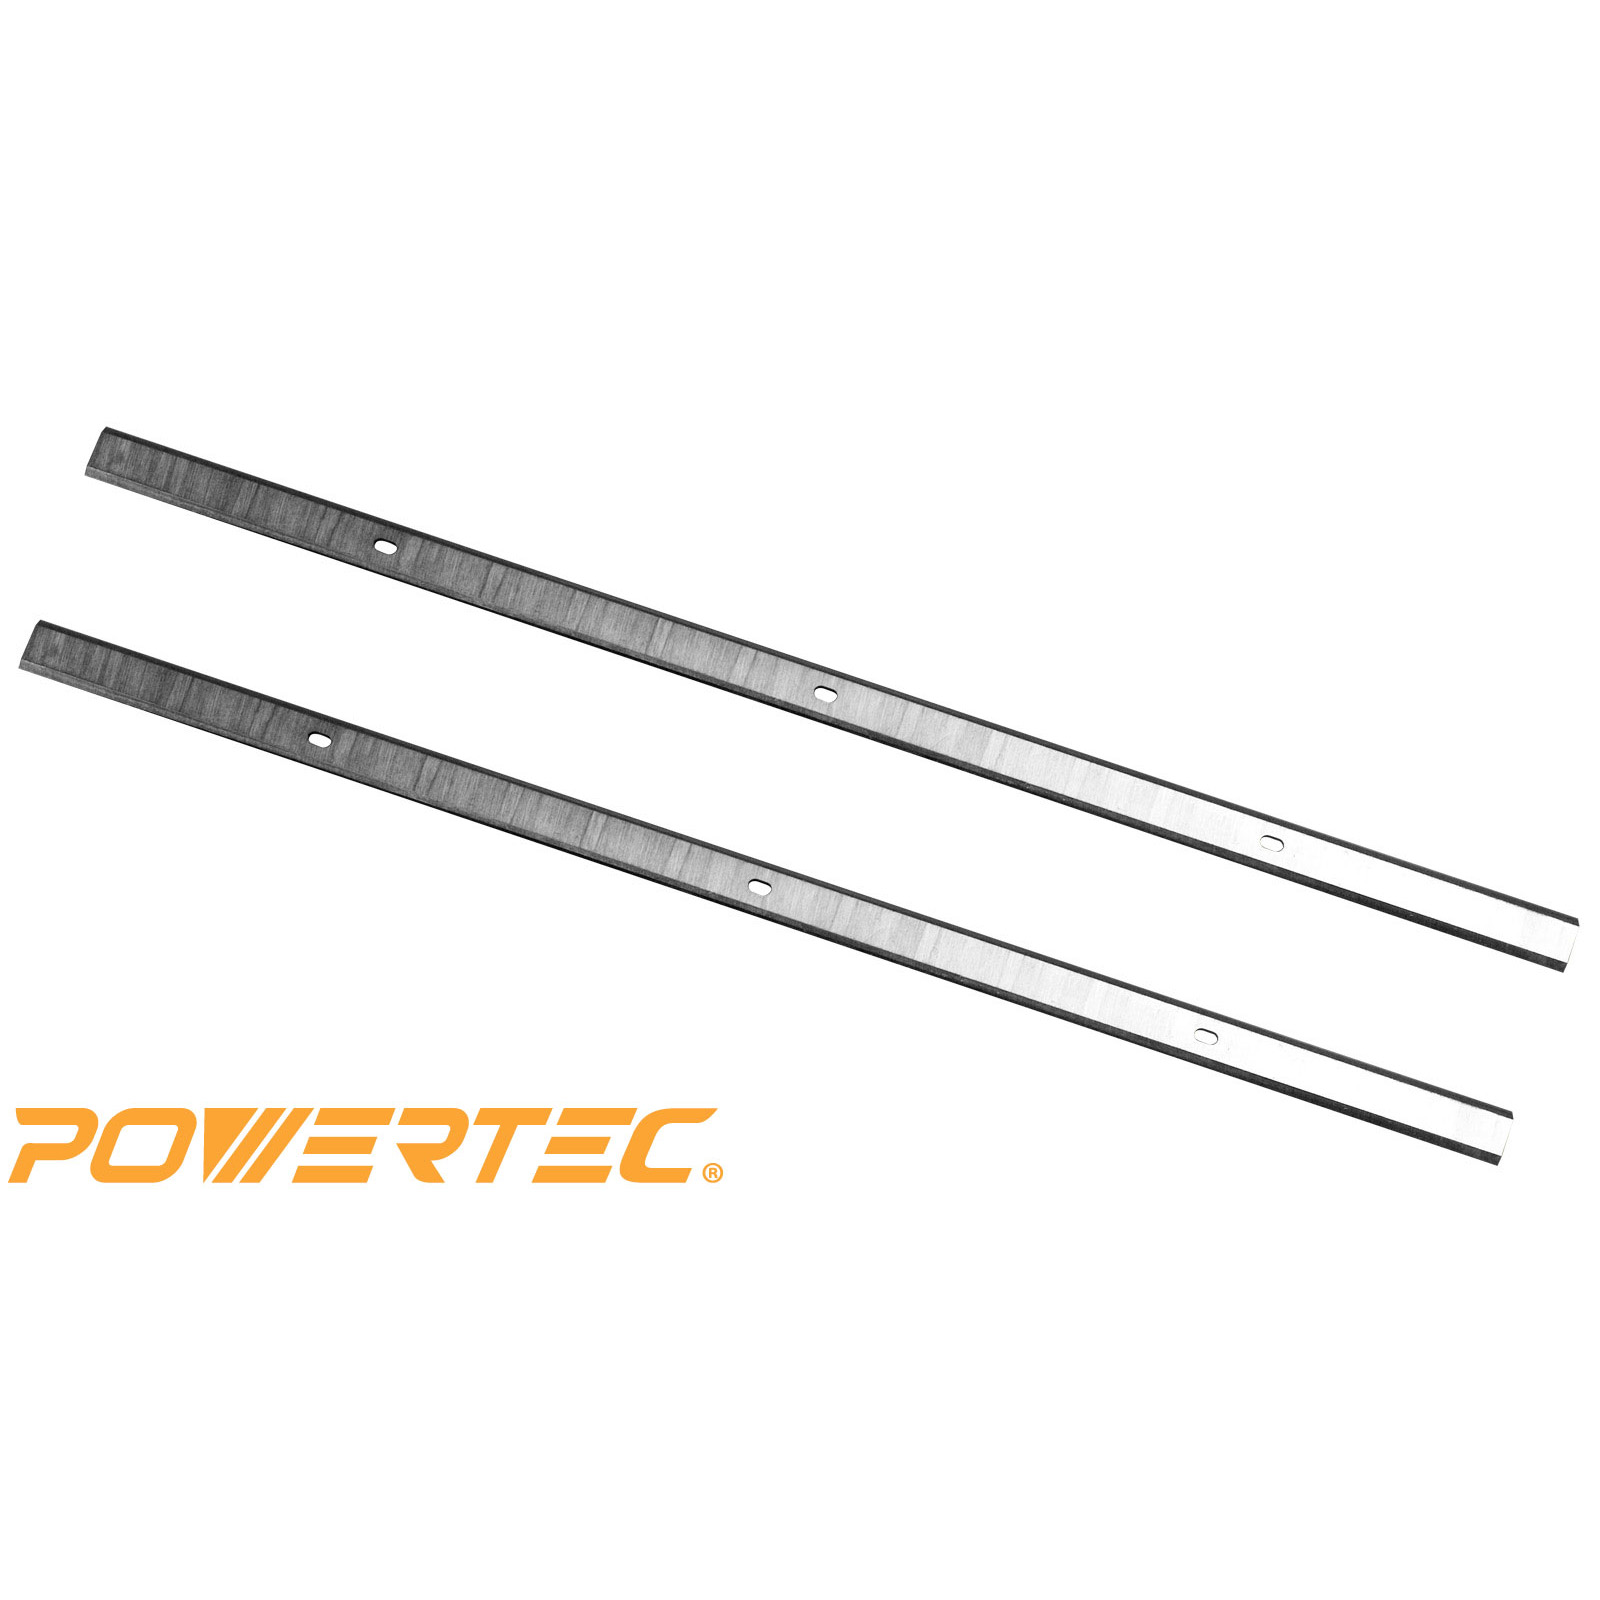 Powertec 128021 13-Inch Planer Knives for Craftsman 21743, HSS, Set of 2